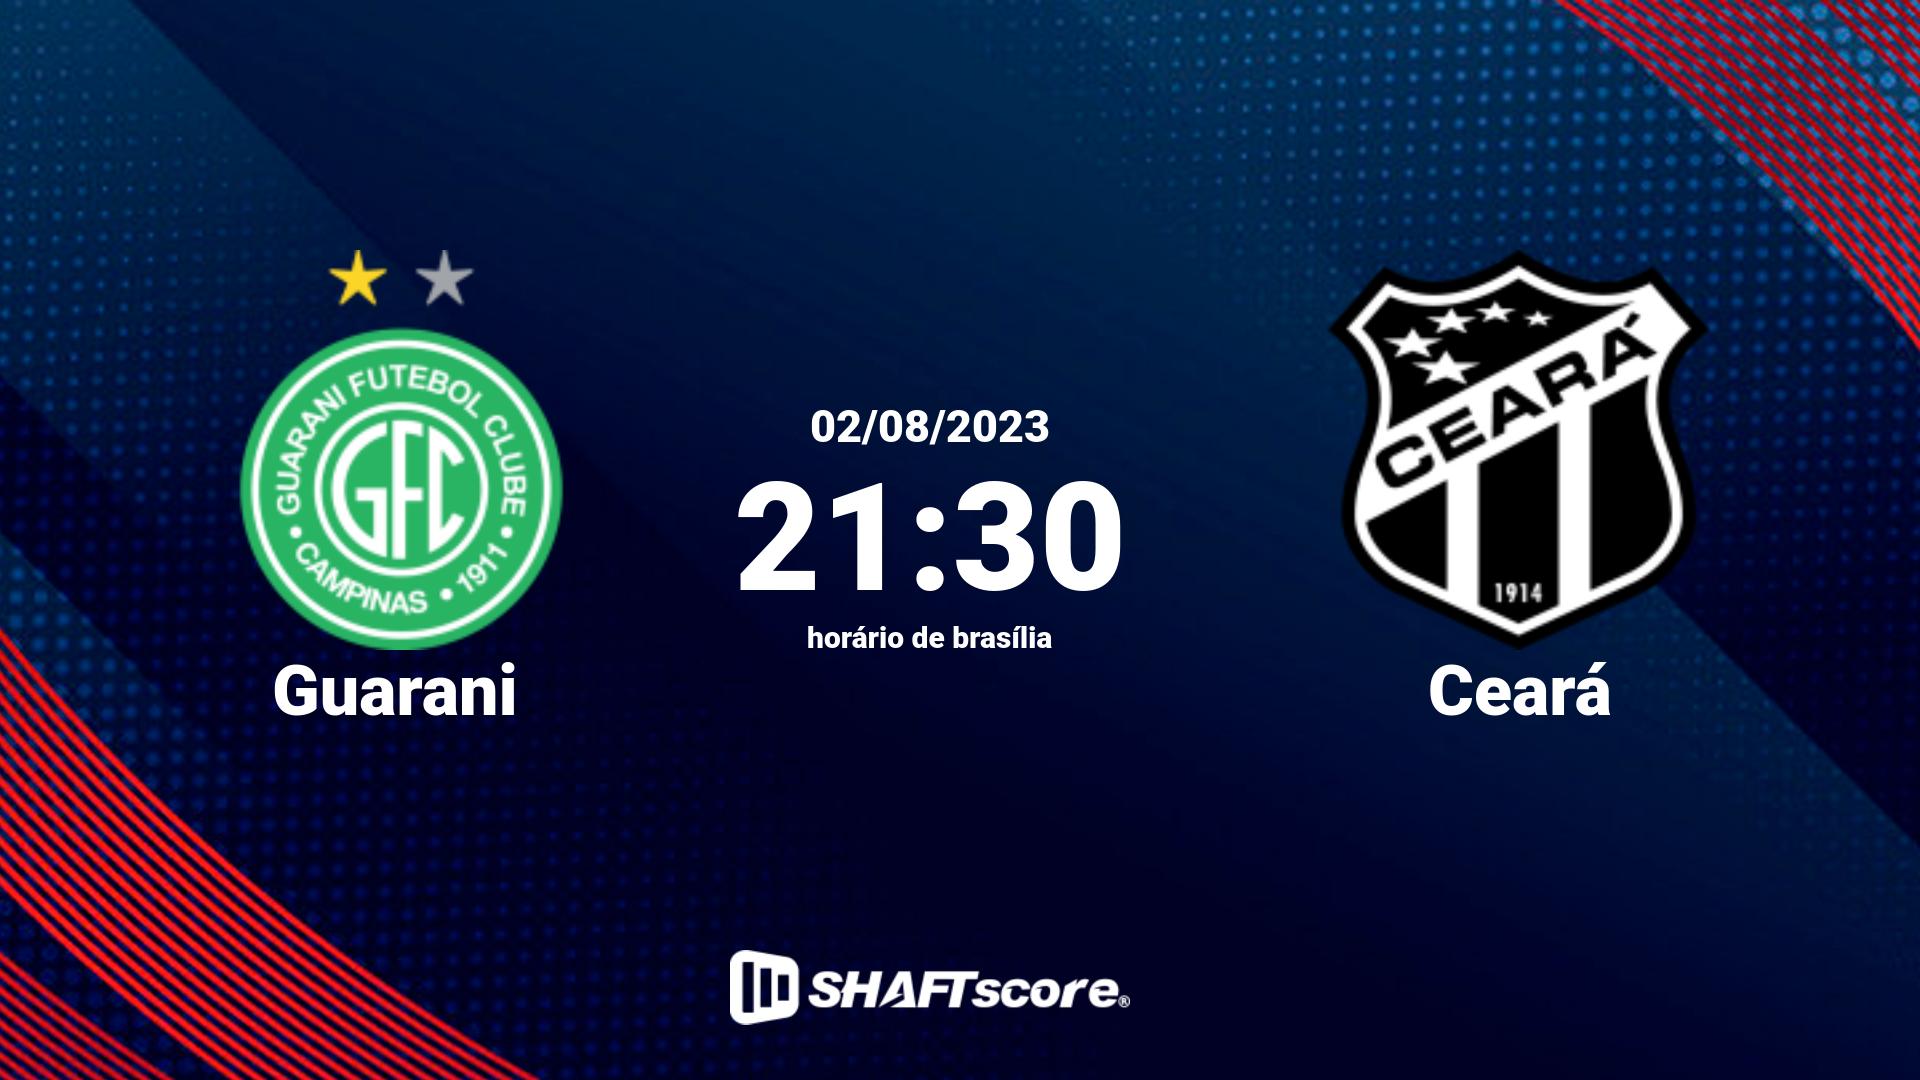 Estatísticas do jogo Guarani vs Ceará 02.08 21:30